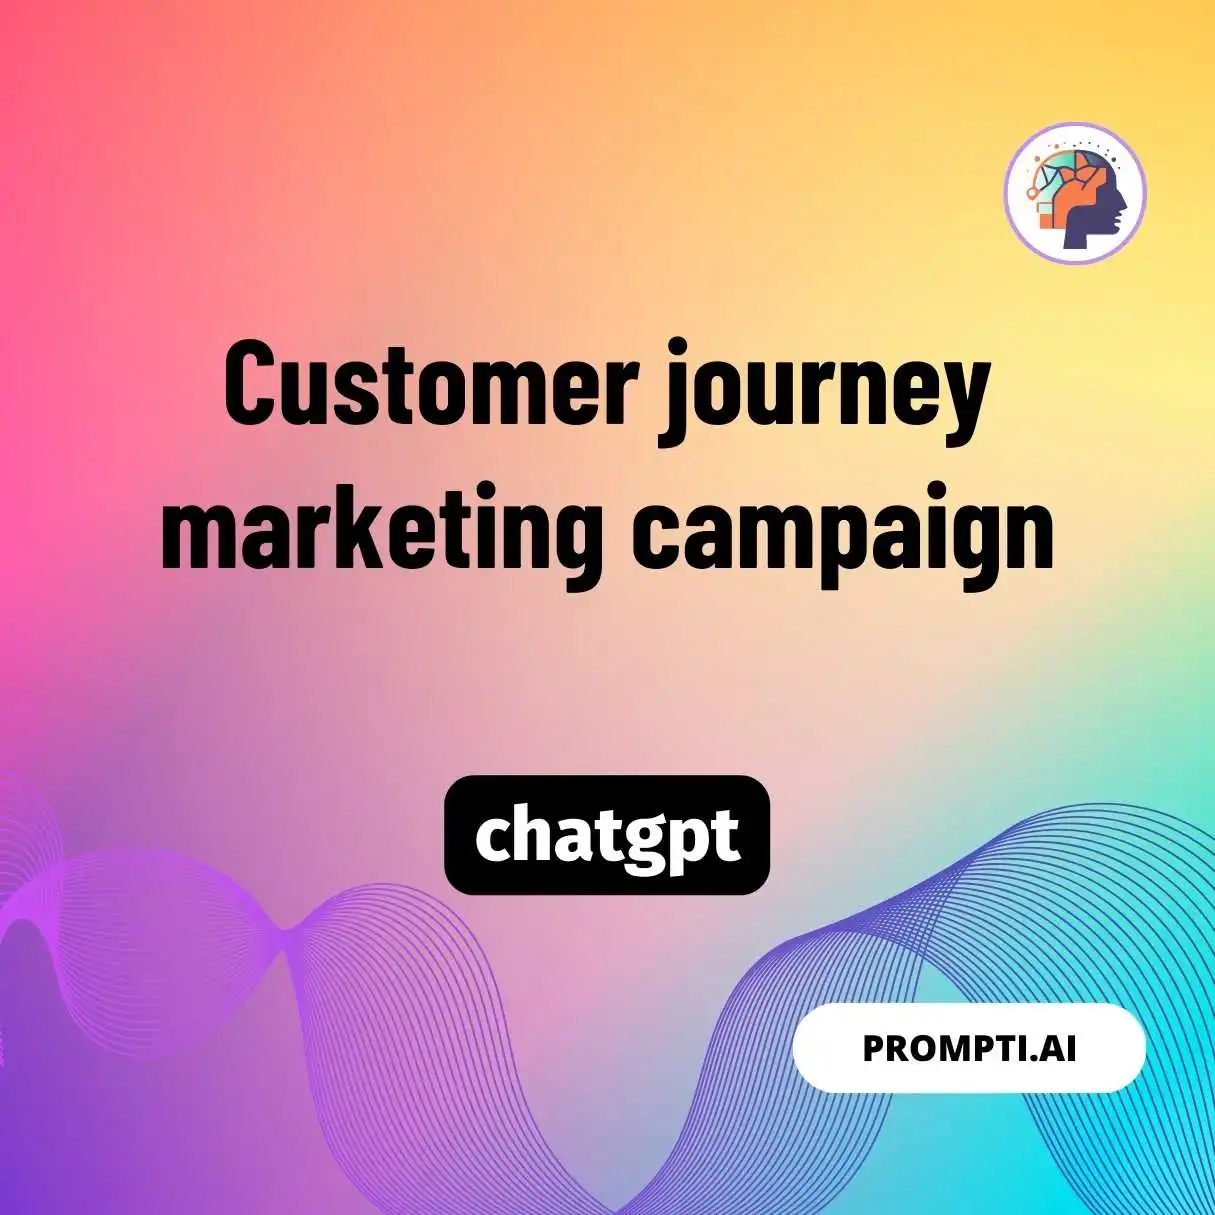 Customer journey marketing campaign